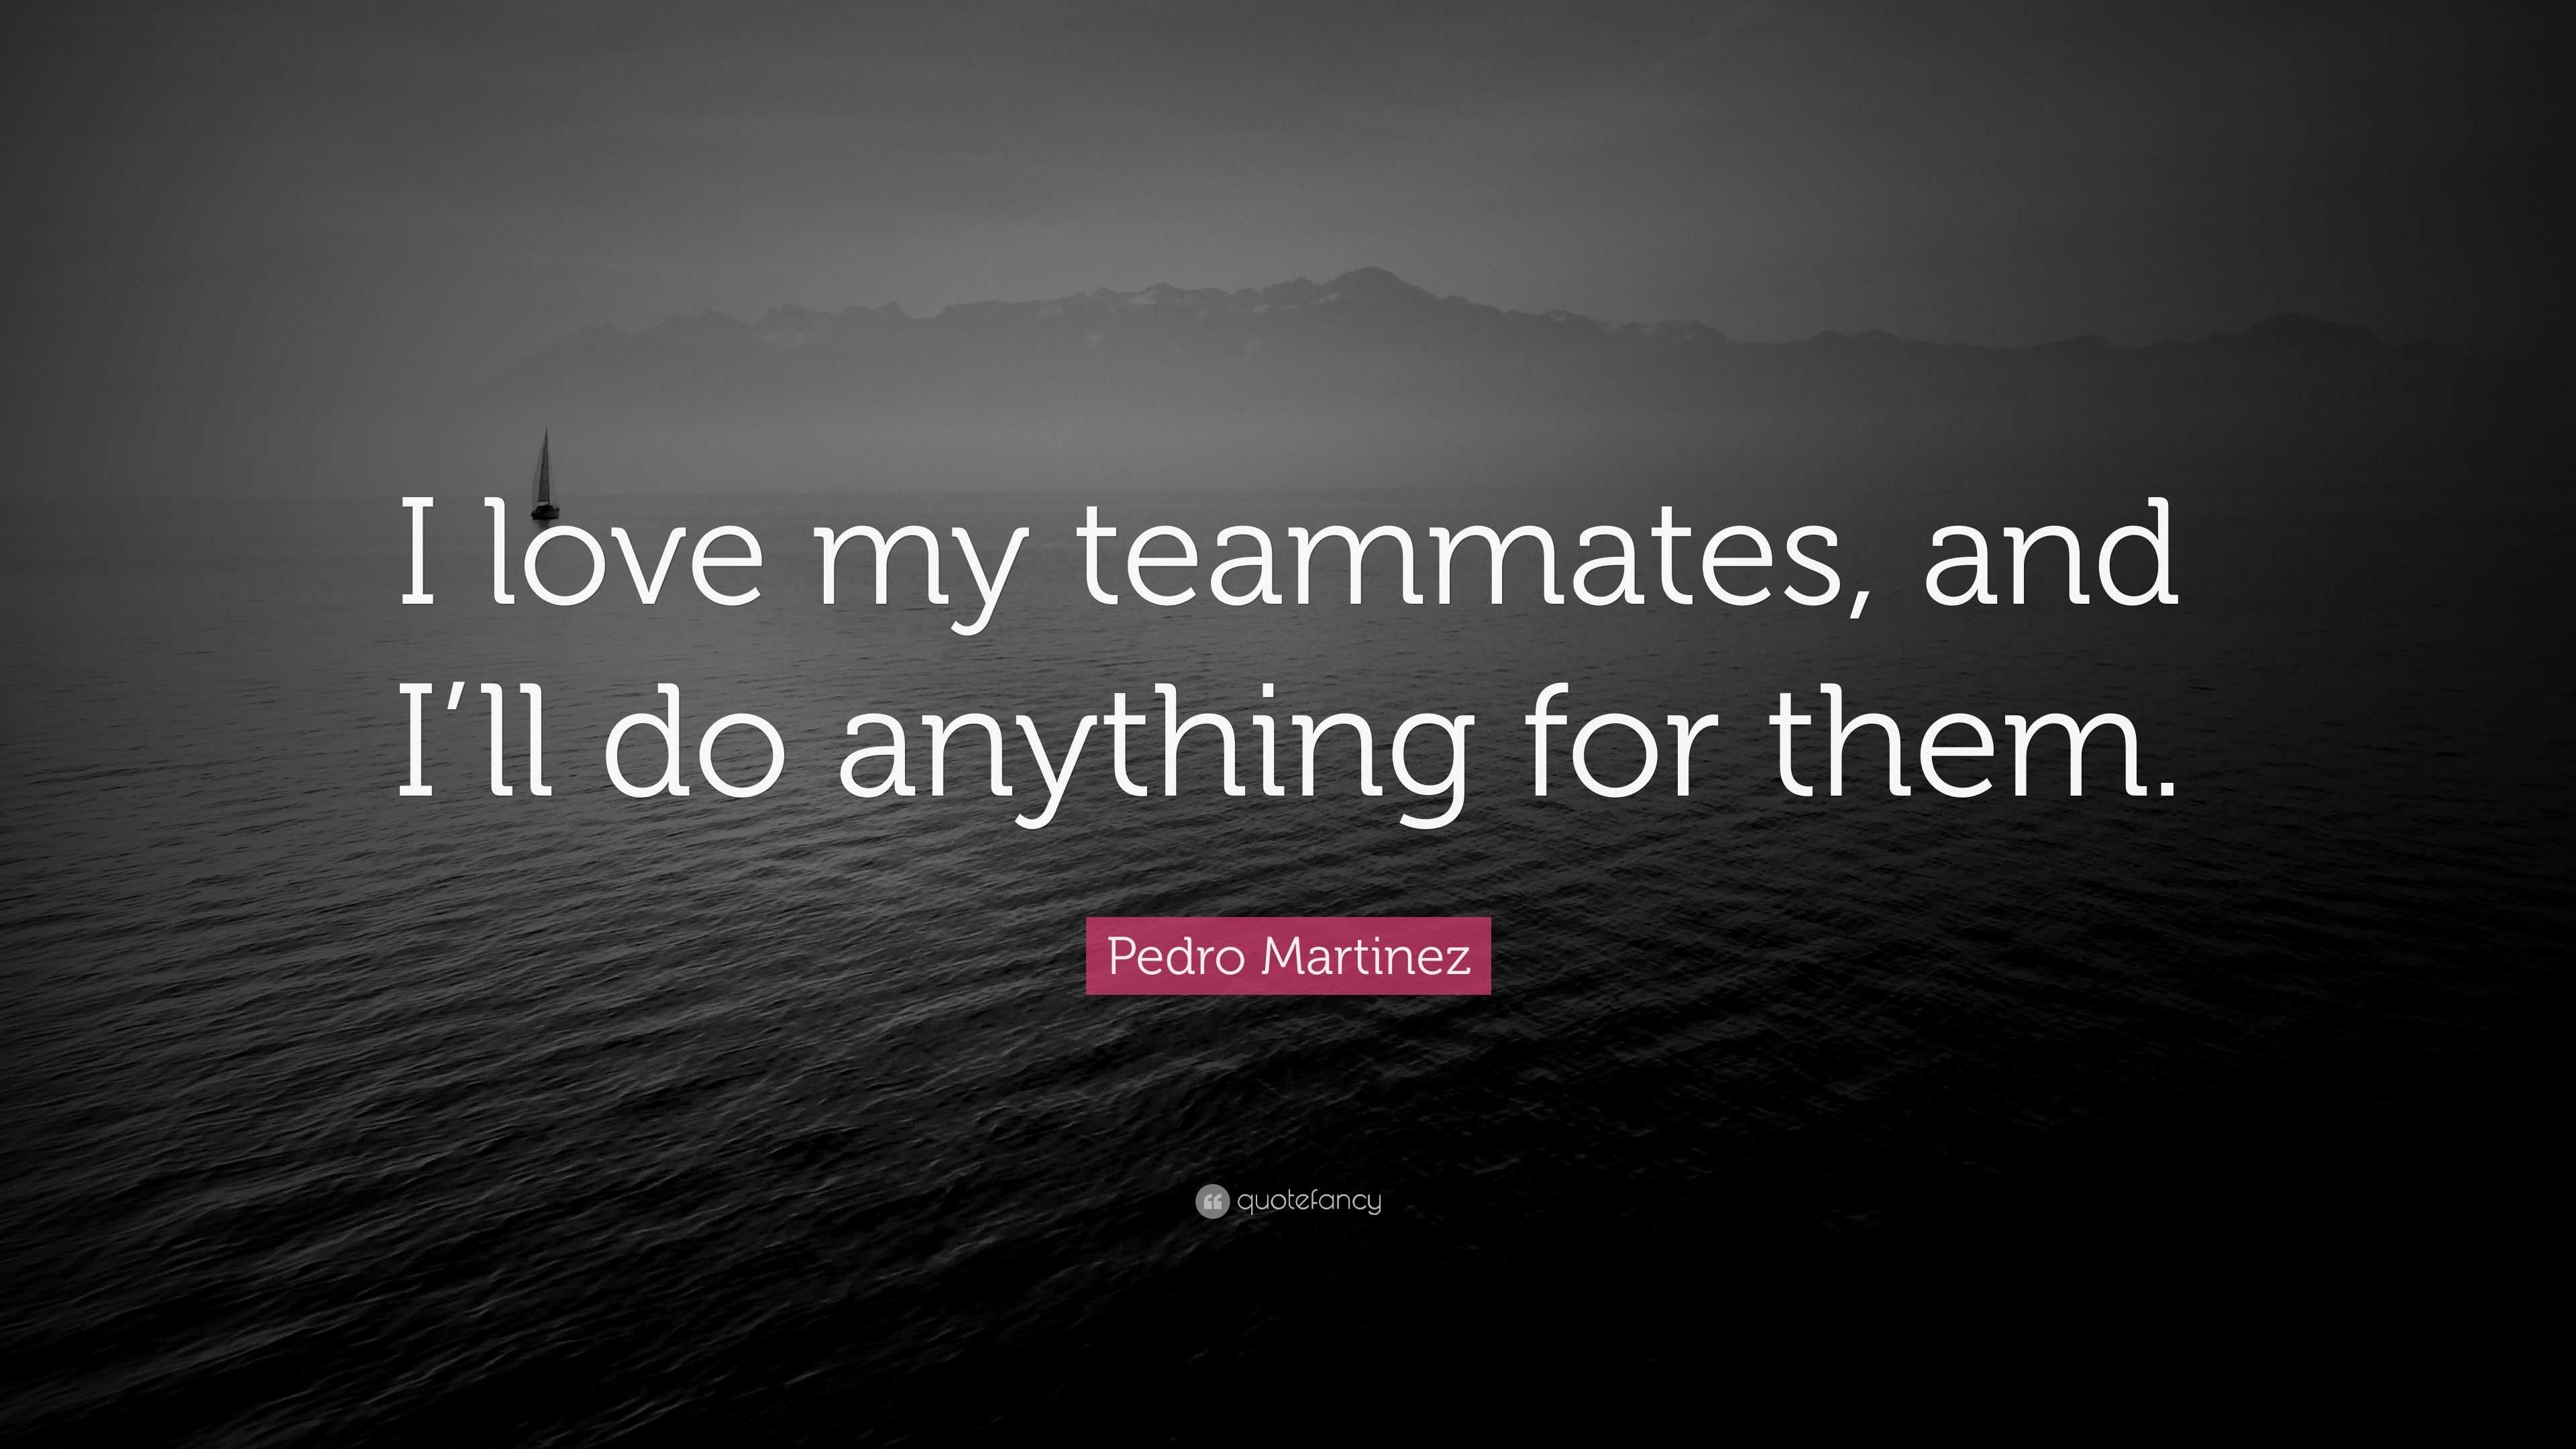 Pedro Martinez Quote: “I love my teammates, and I'll do anything